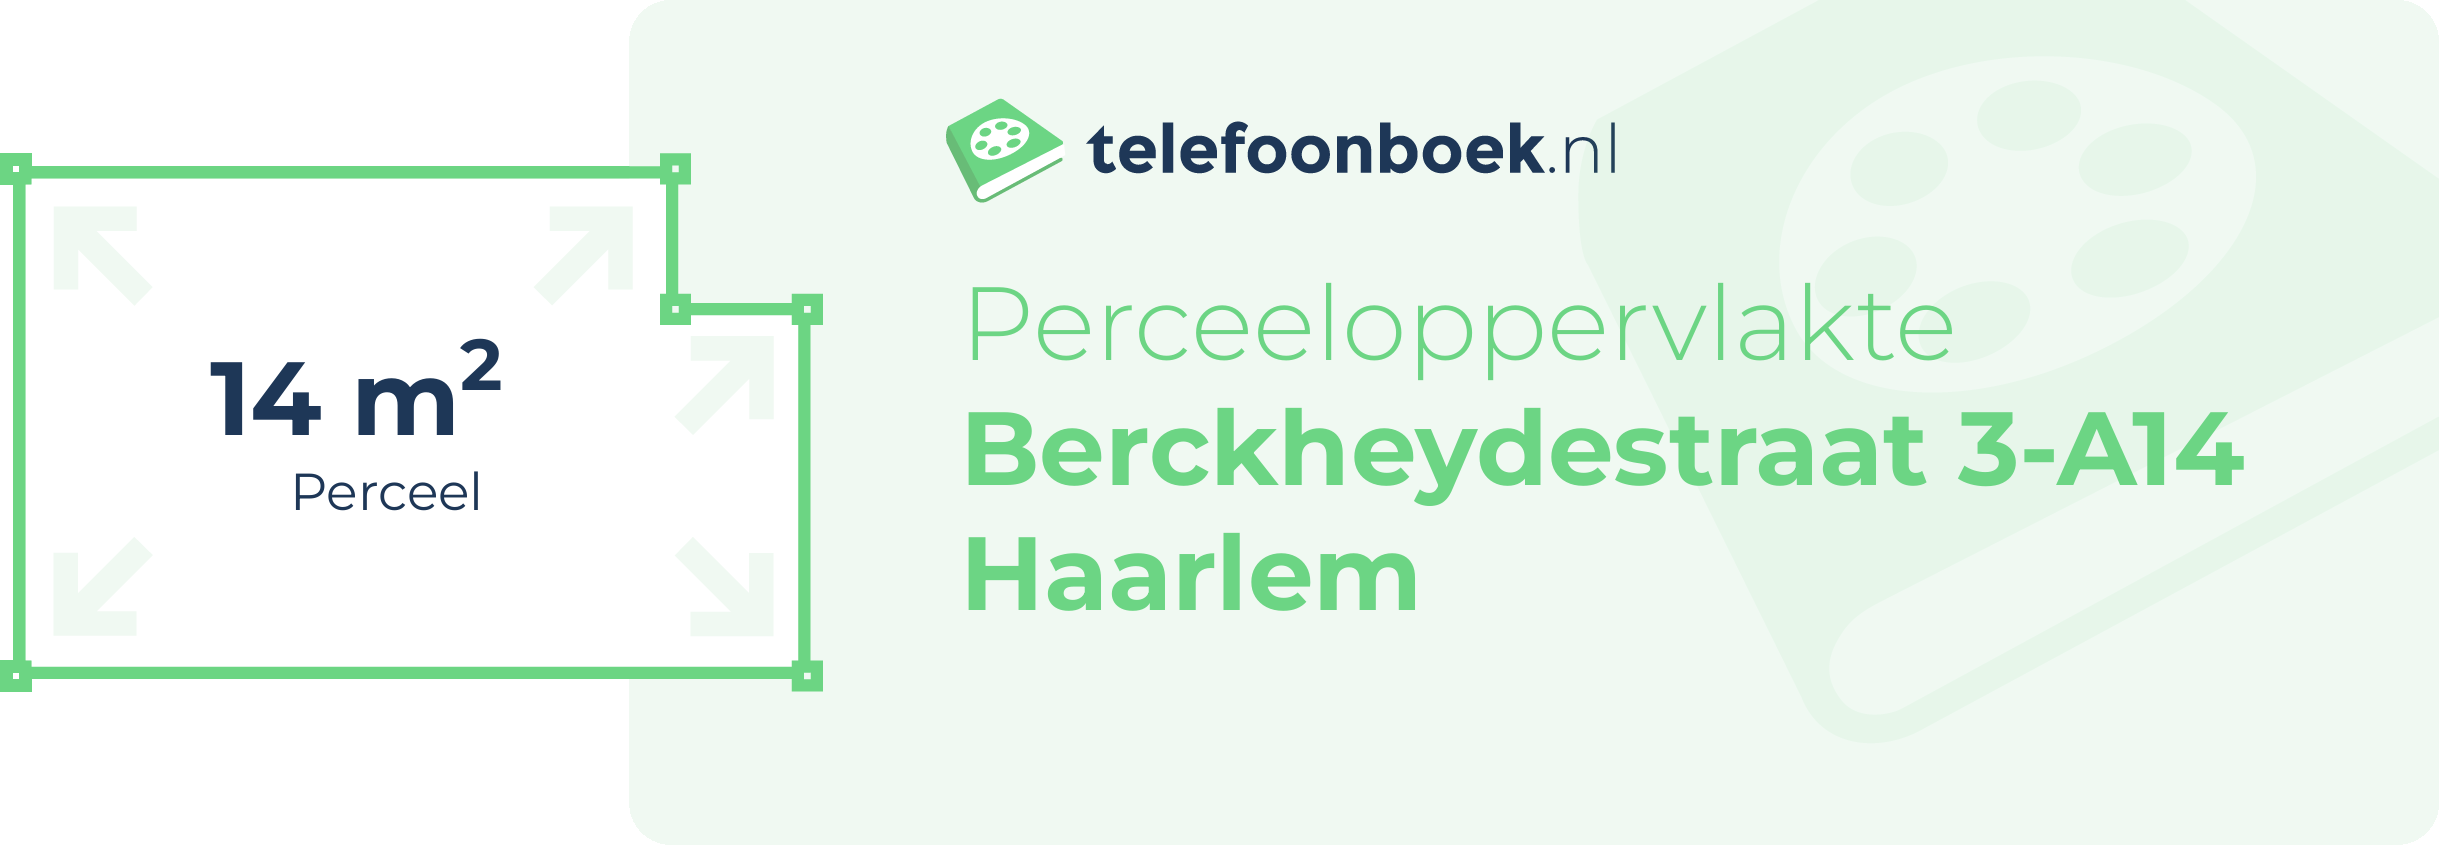 Perceeloppervlakte Berckheydestraat 3-A14 Haarlem